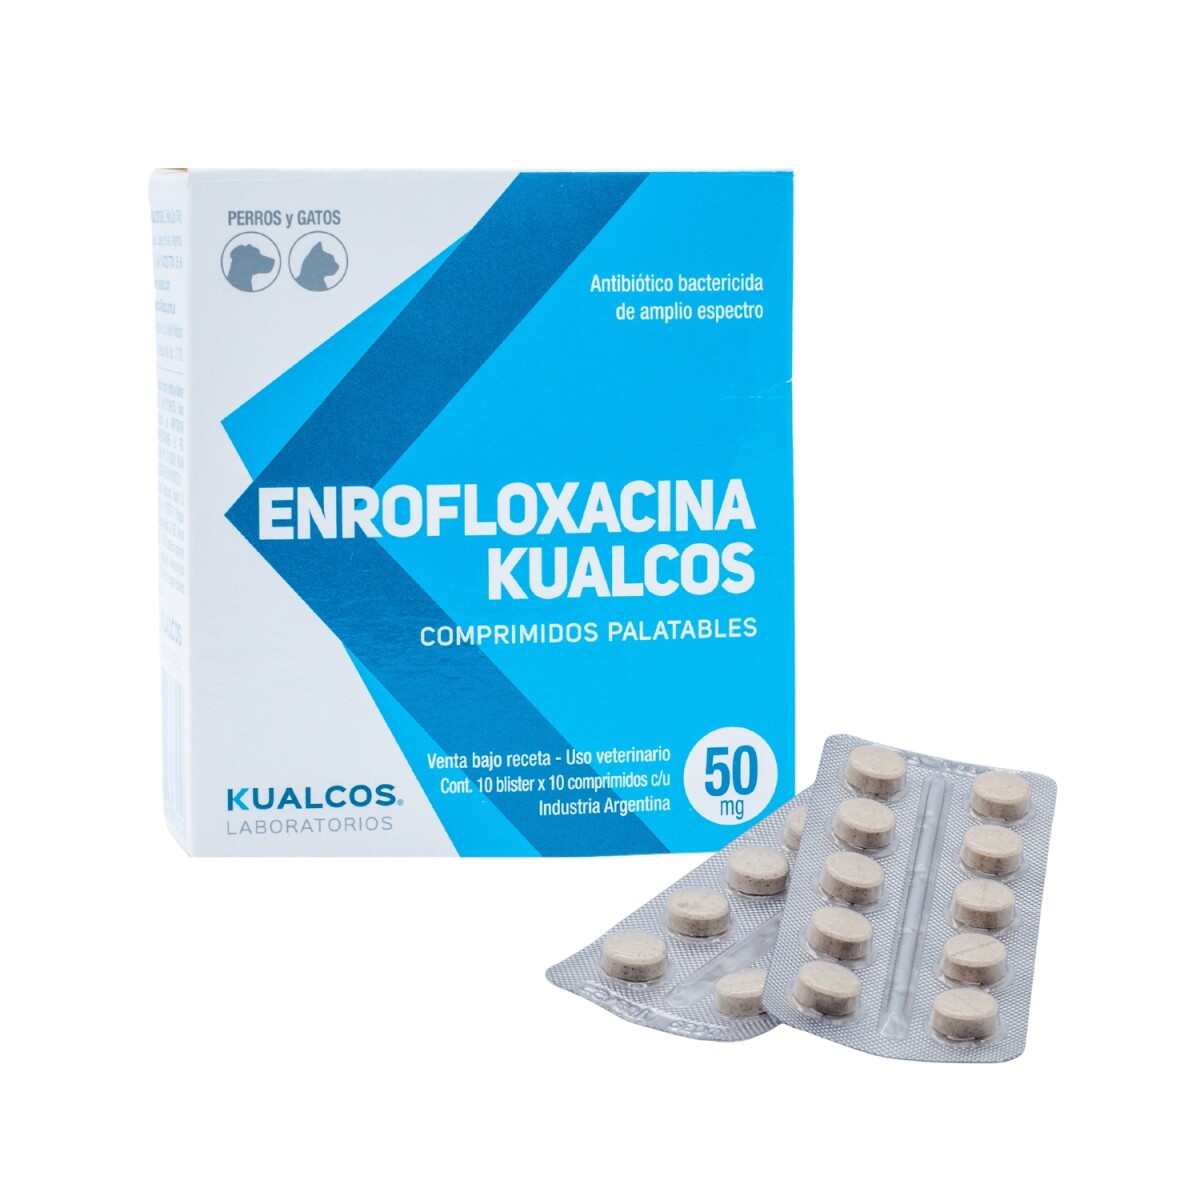 ENROFLOXACINA KUALCOS 50 MG X BLISTERS DE 10 COMPRIMIDOS PALATABLE 